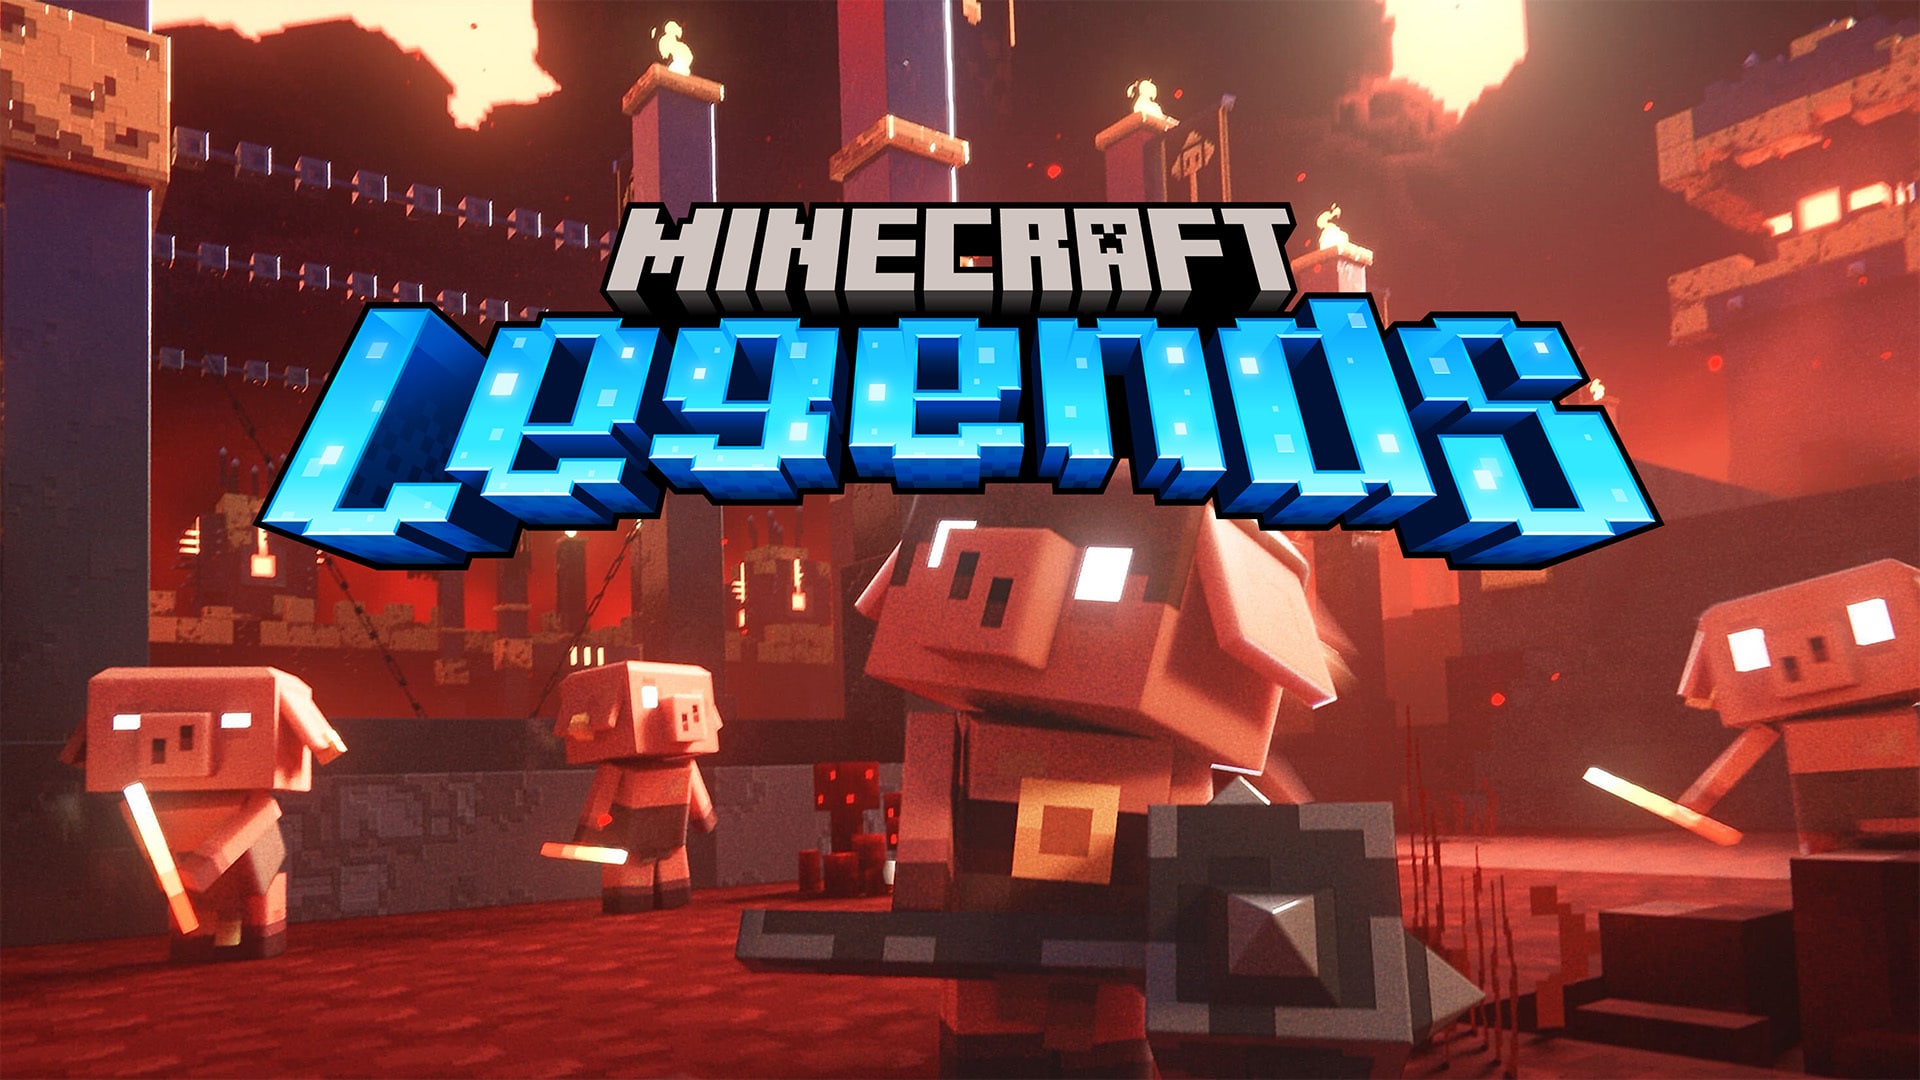 Minecraft Legends: Fiery Foes – Official Trailer